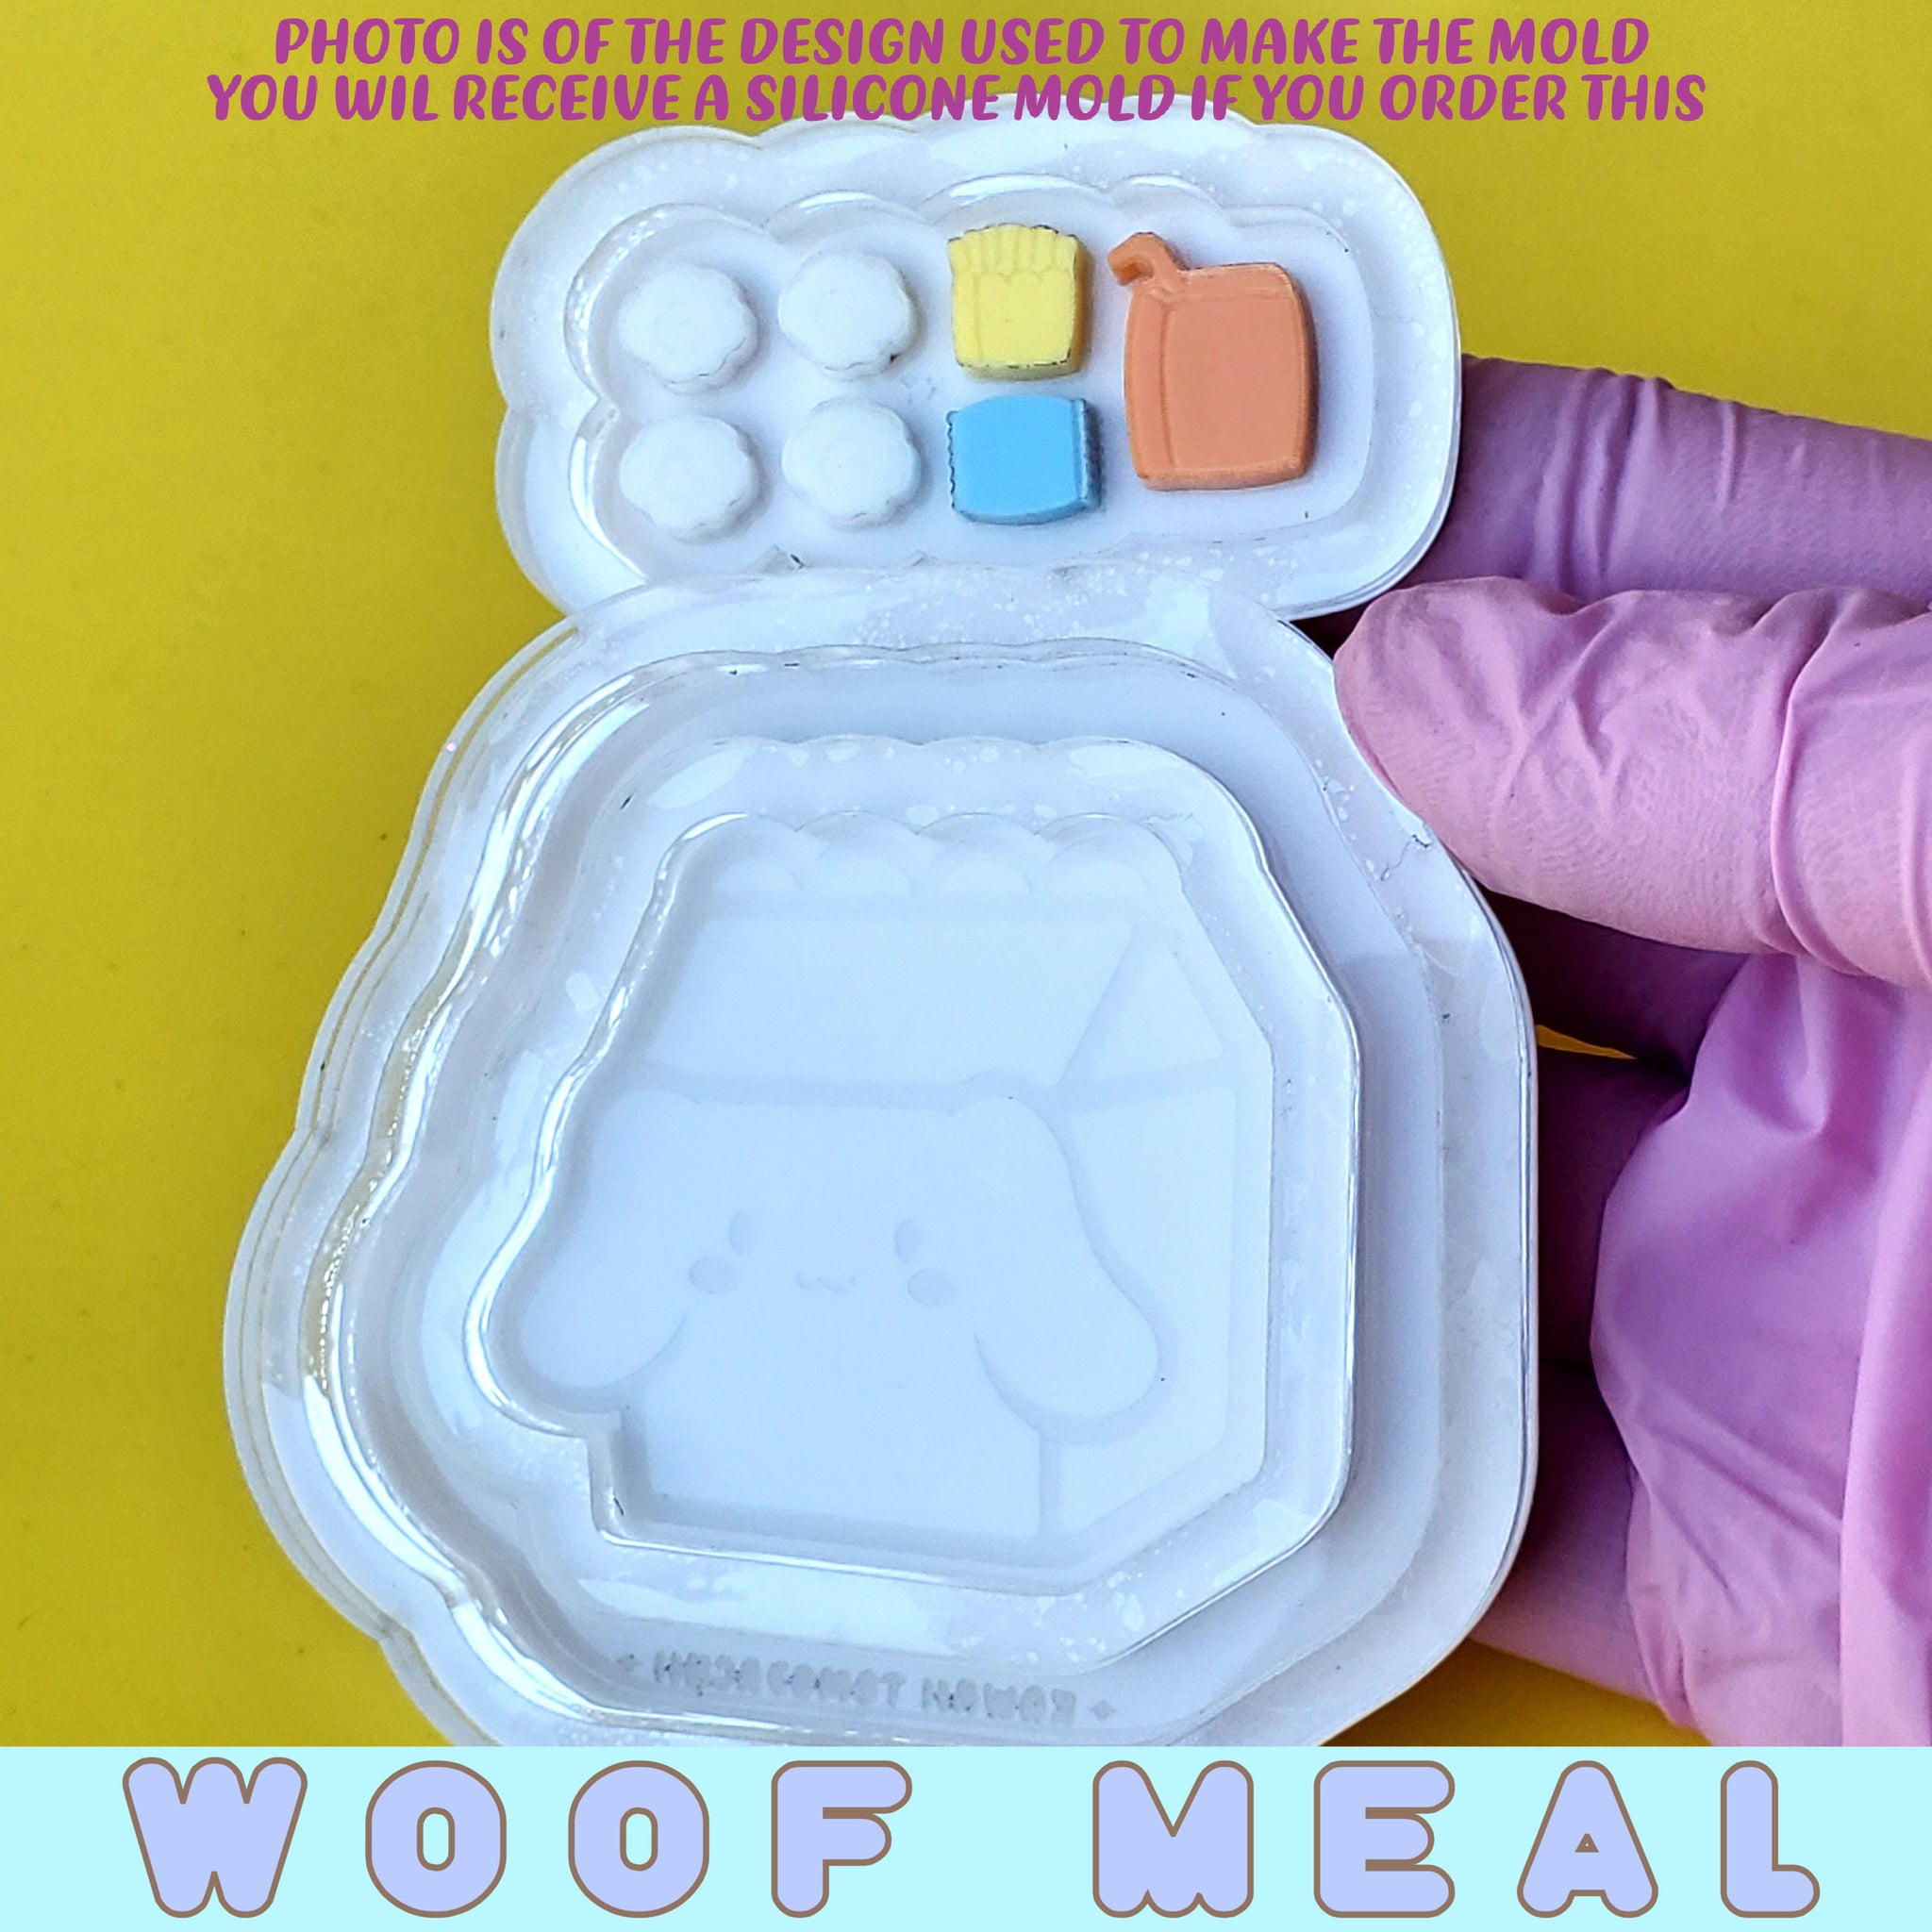 Happy Cuties Meal Box Shaker Mold Sets